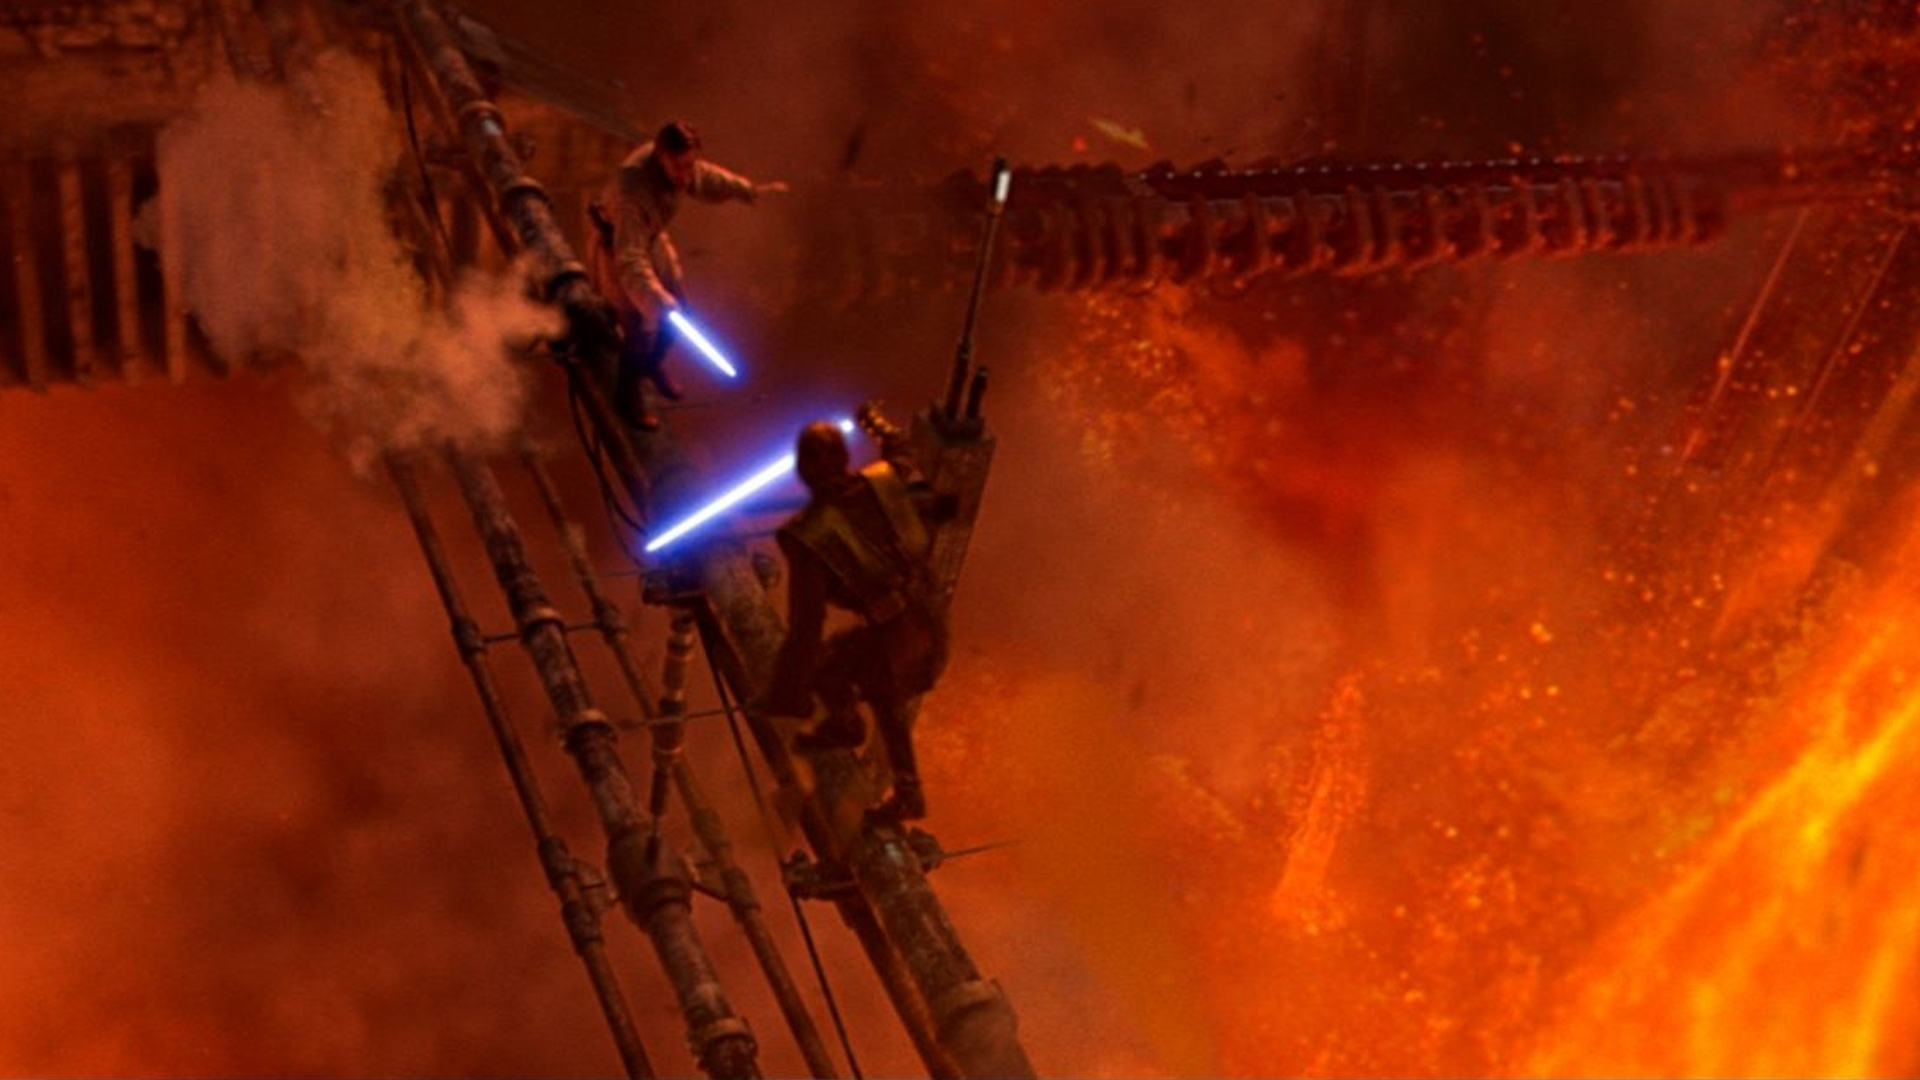 Obi-Wan Kenobi vs. Anakin Skywalker - Star Wars Episode III - Revenge of the Sith